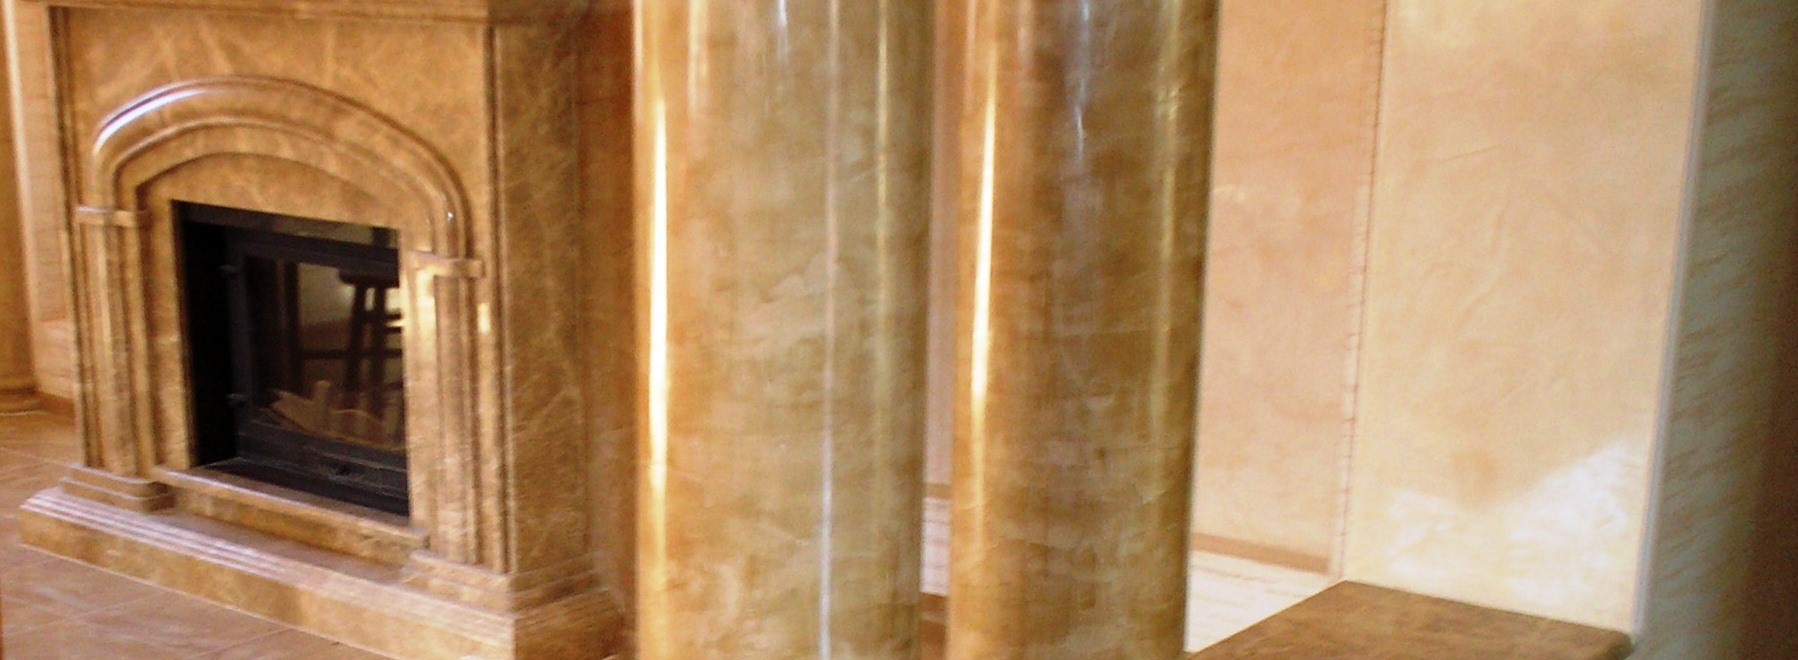 камин и колоны